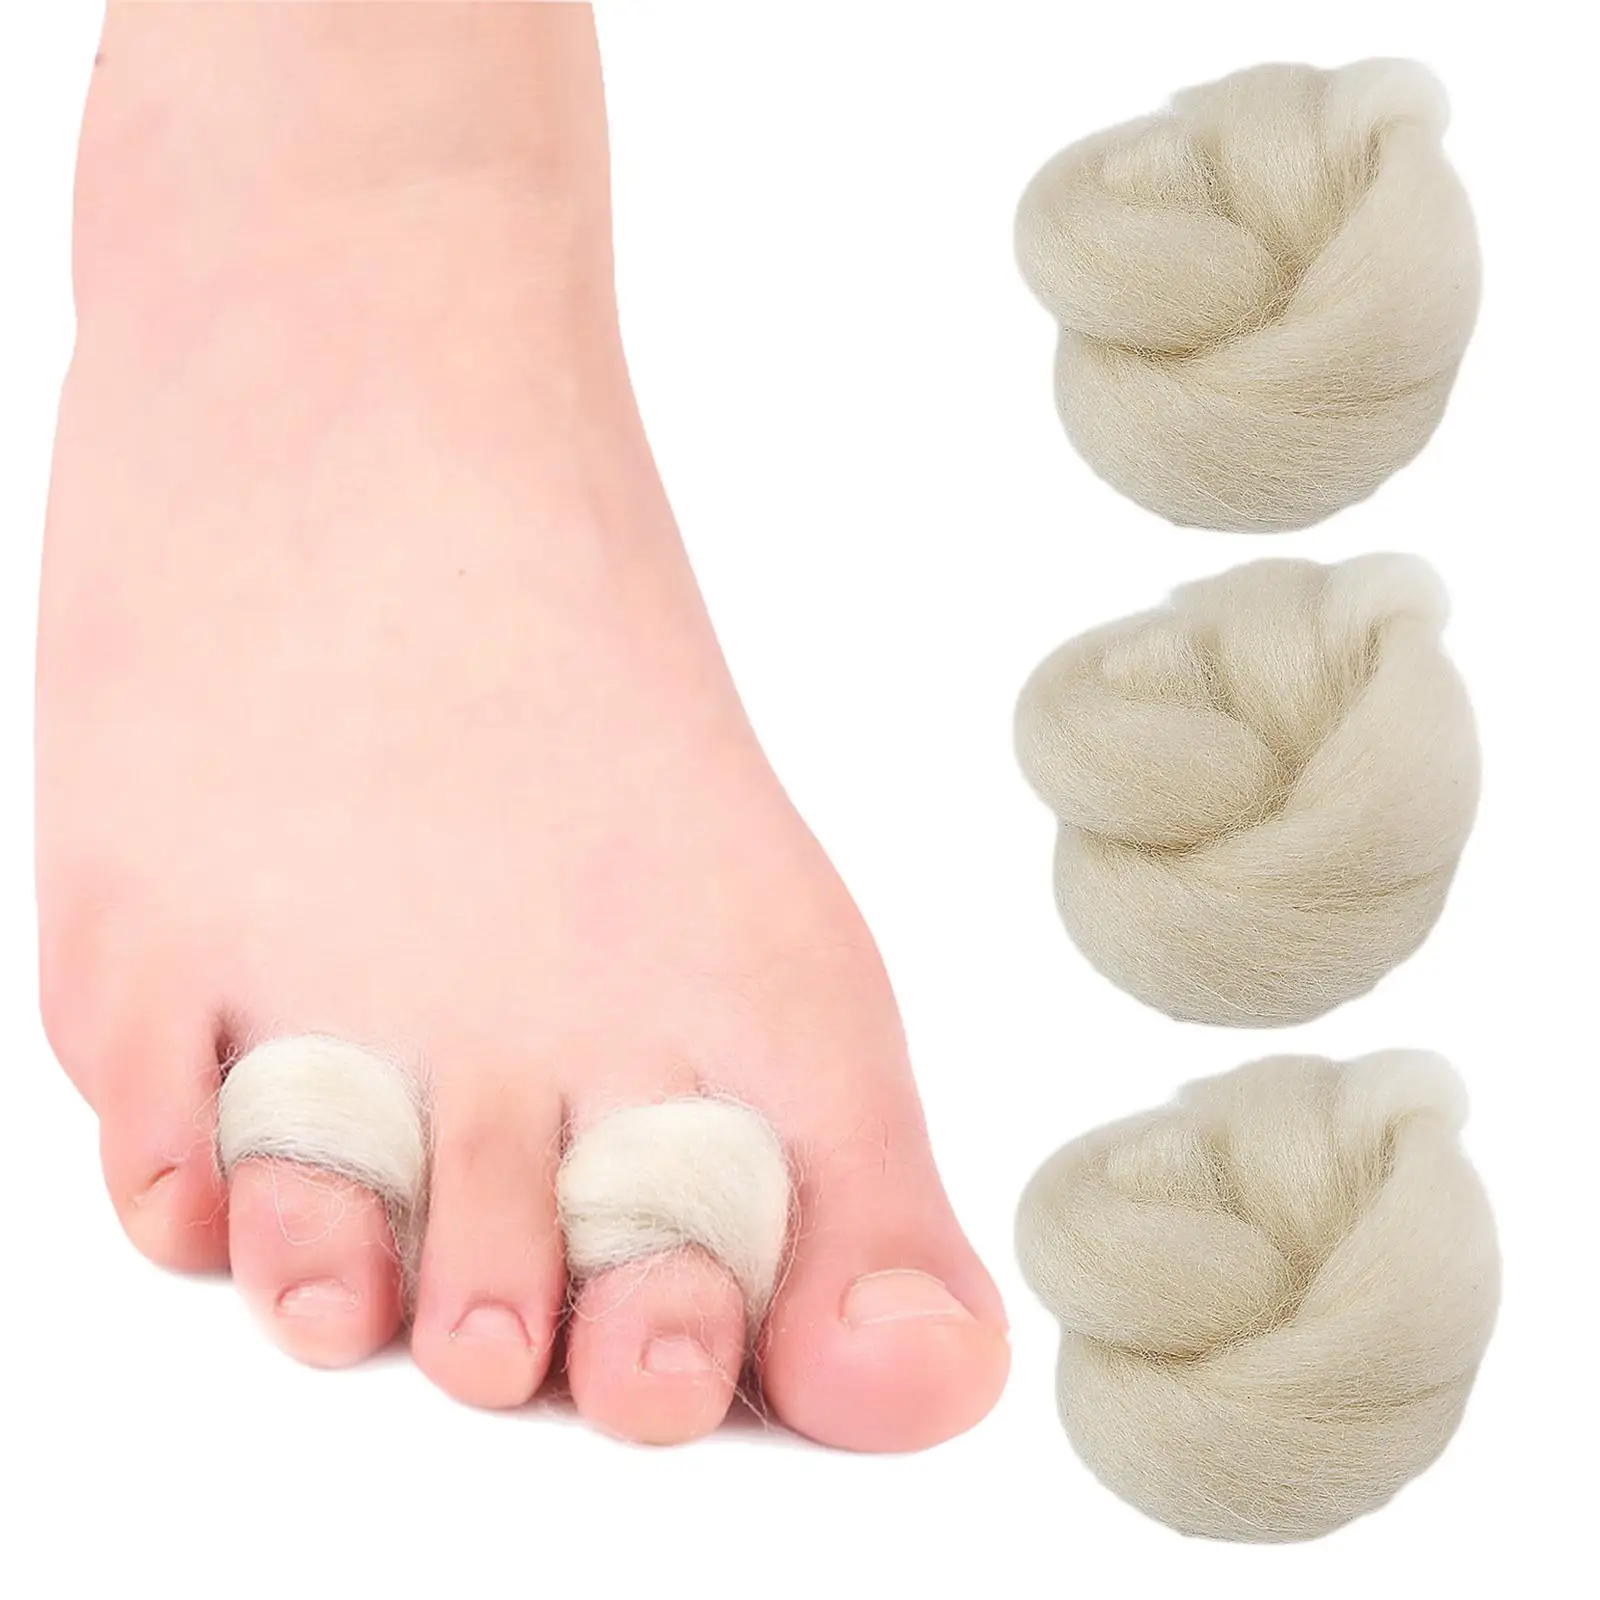 3 Count Wool Feet Cushioning Toe Separator Natural Reduce Soreness Versatile Hiking Blister Pads